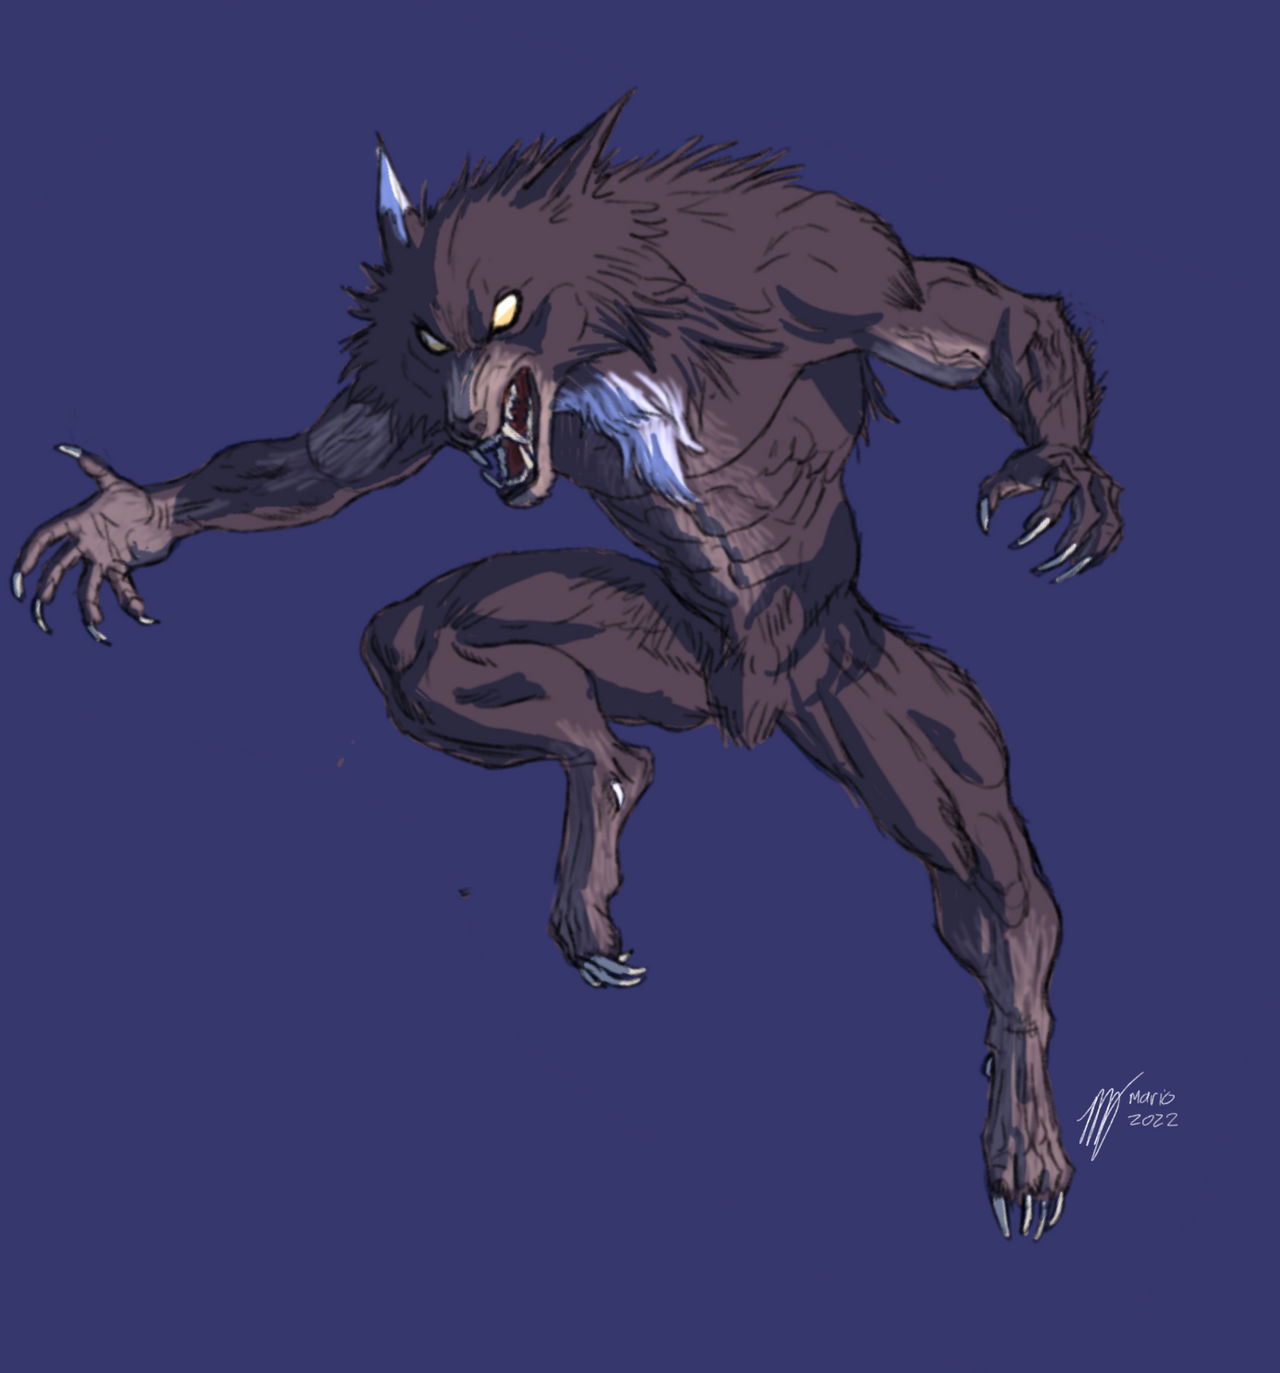 Werewolf by Night (2022) v2 by DrDarkDoom on DeviantArt